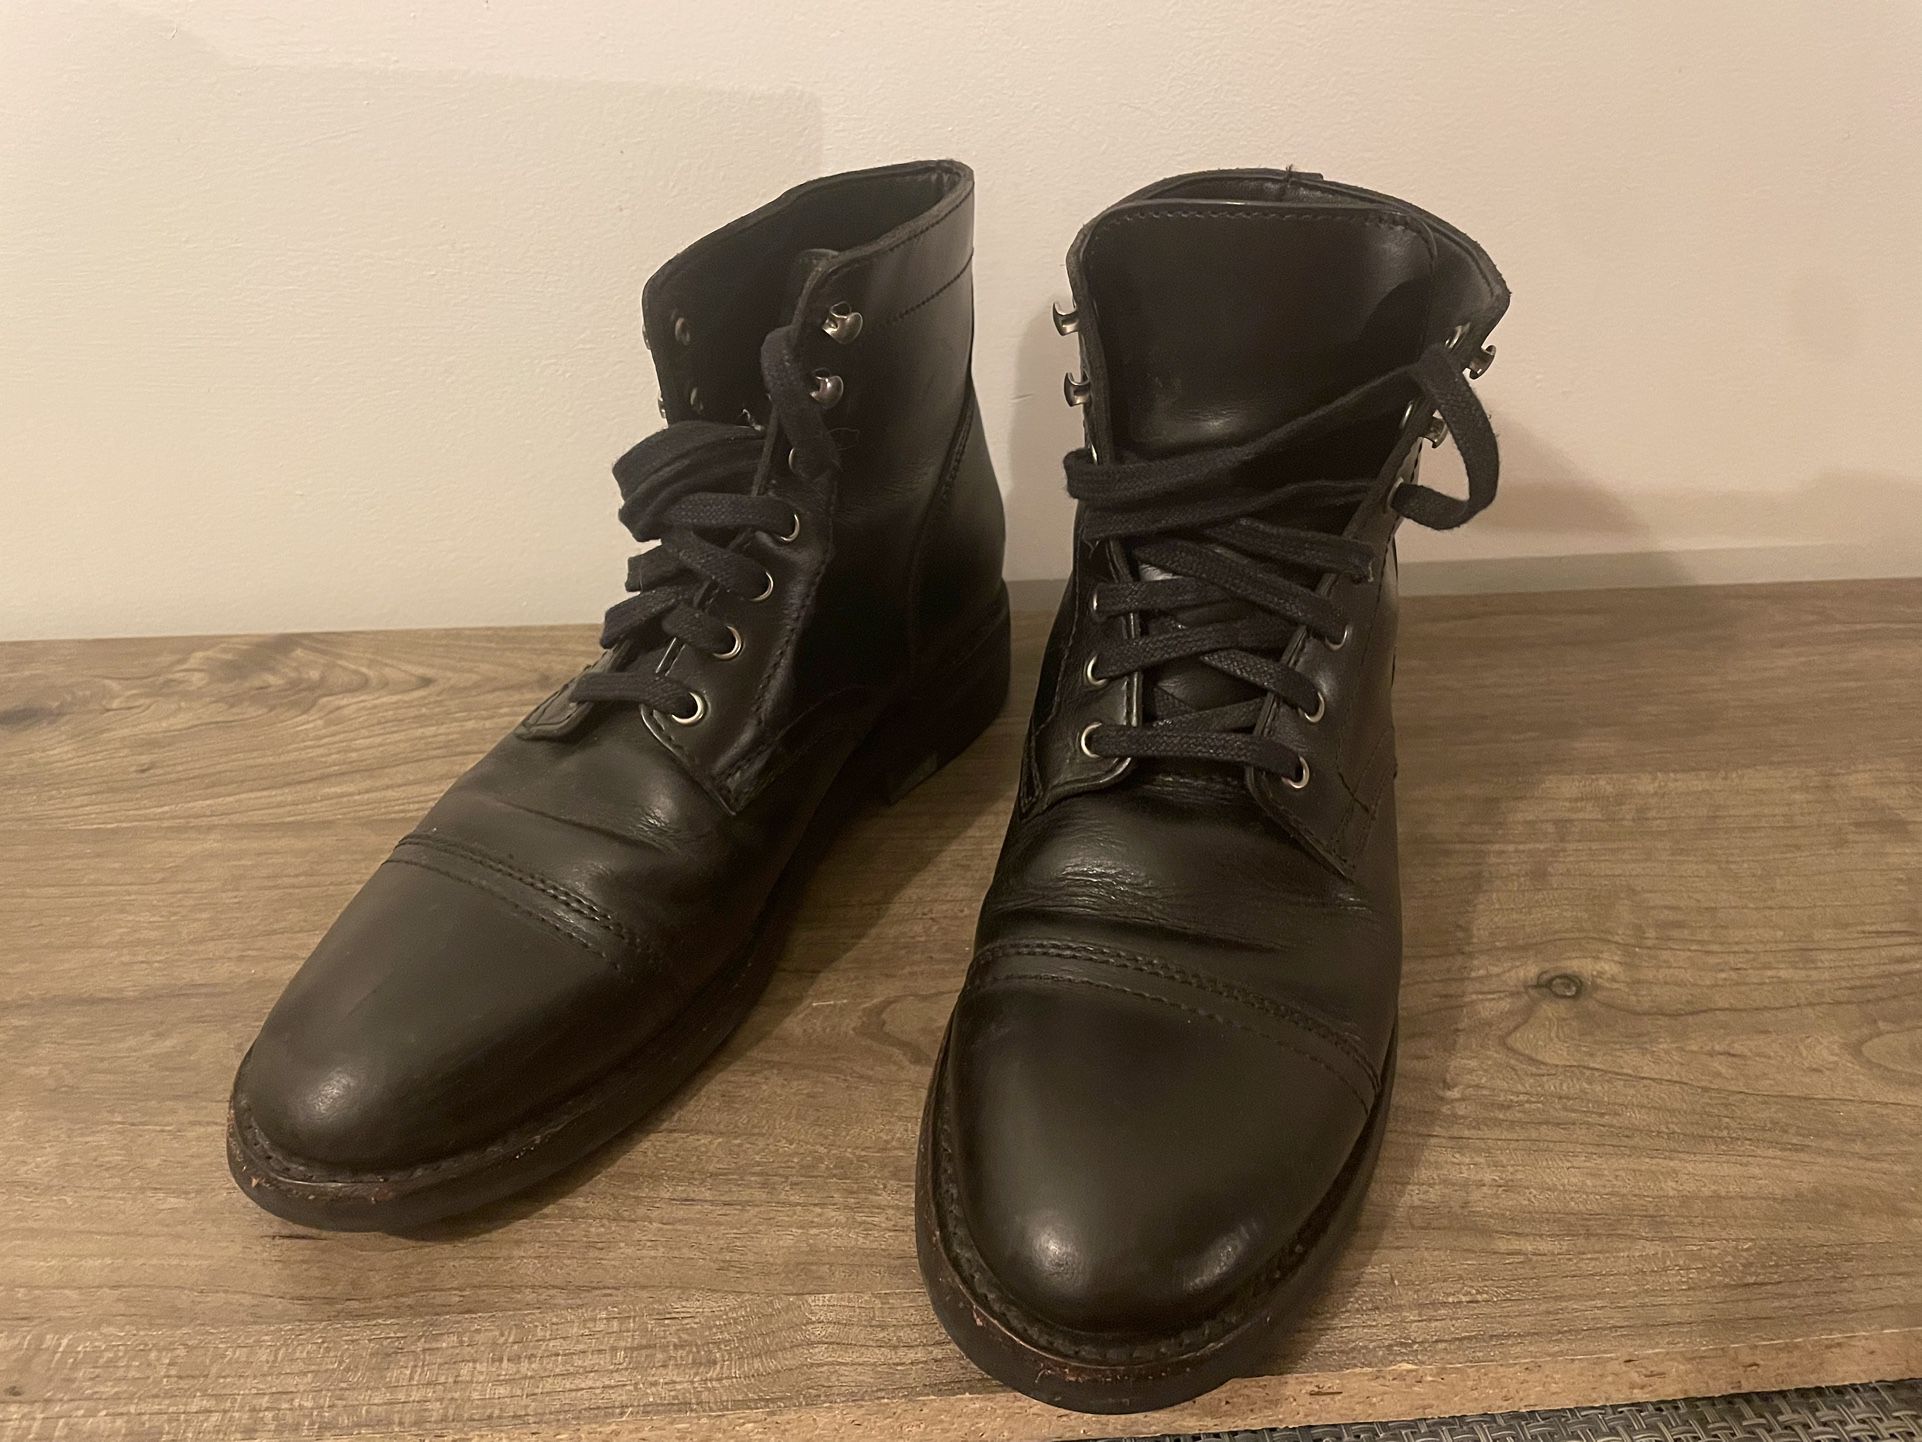 Thursday Boot Co. - Captain - Size 7.5